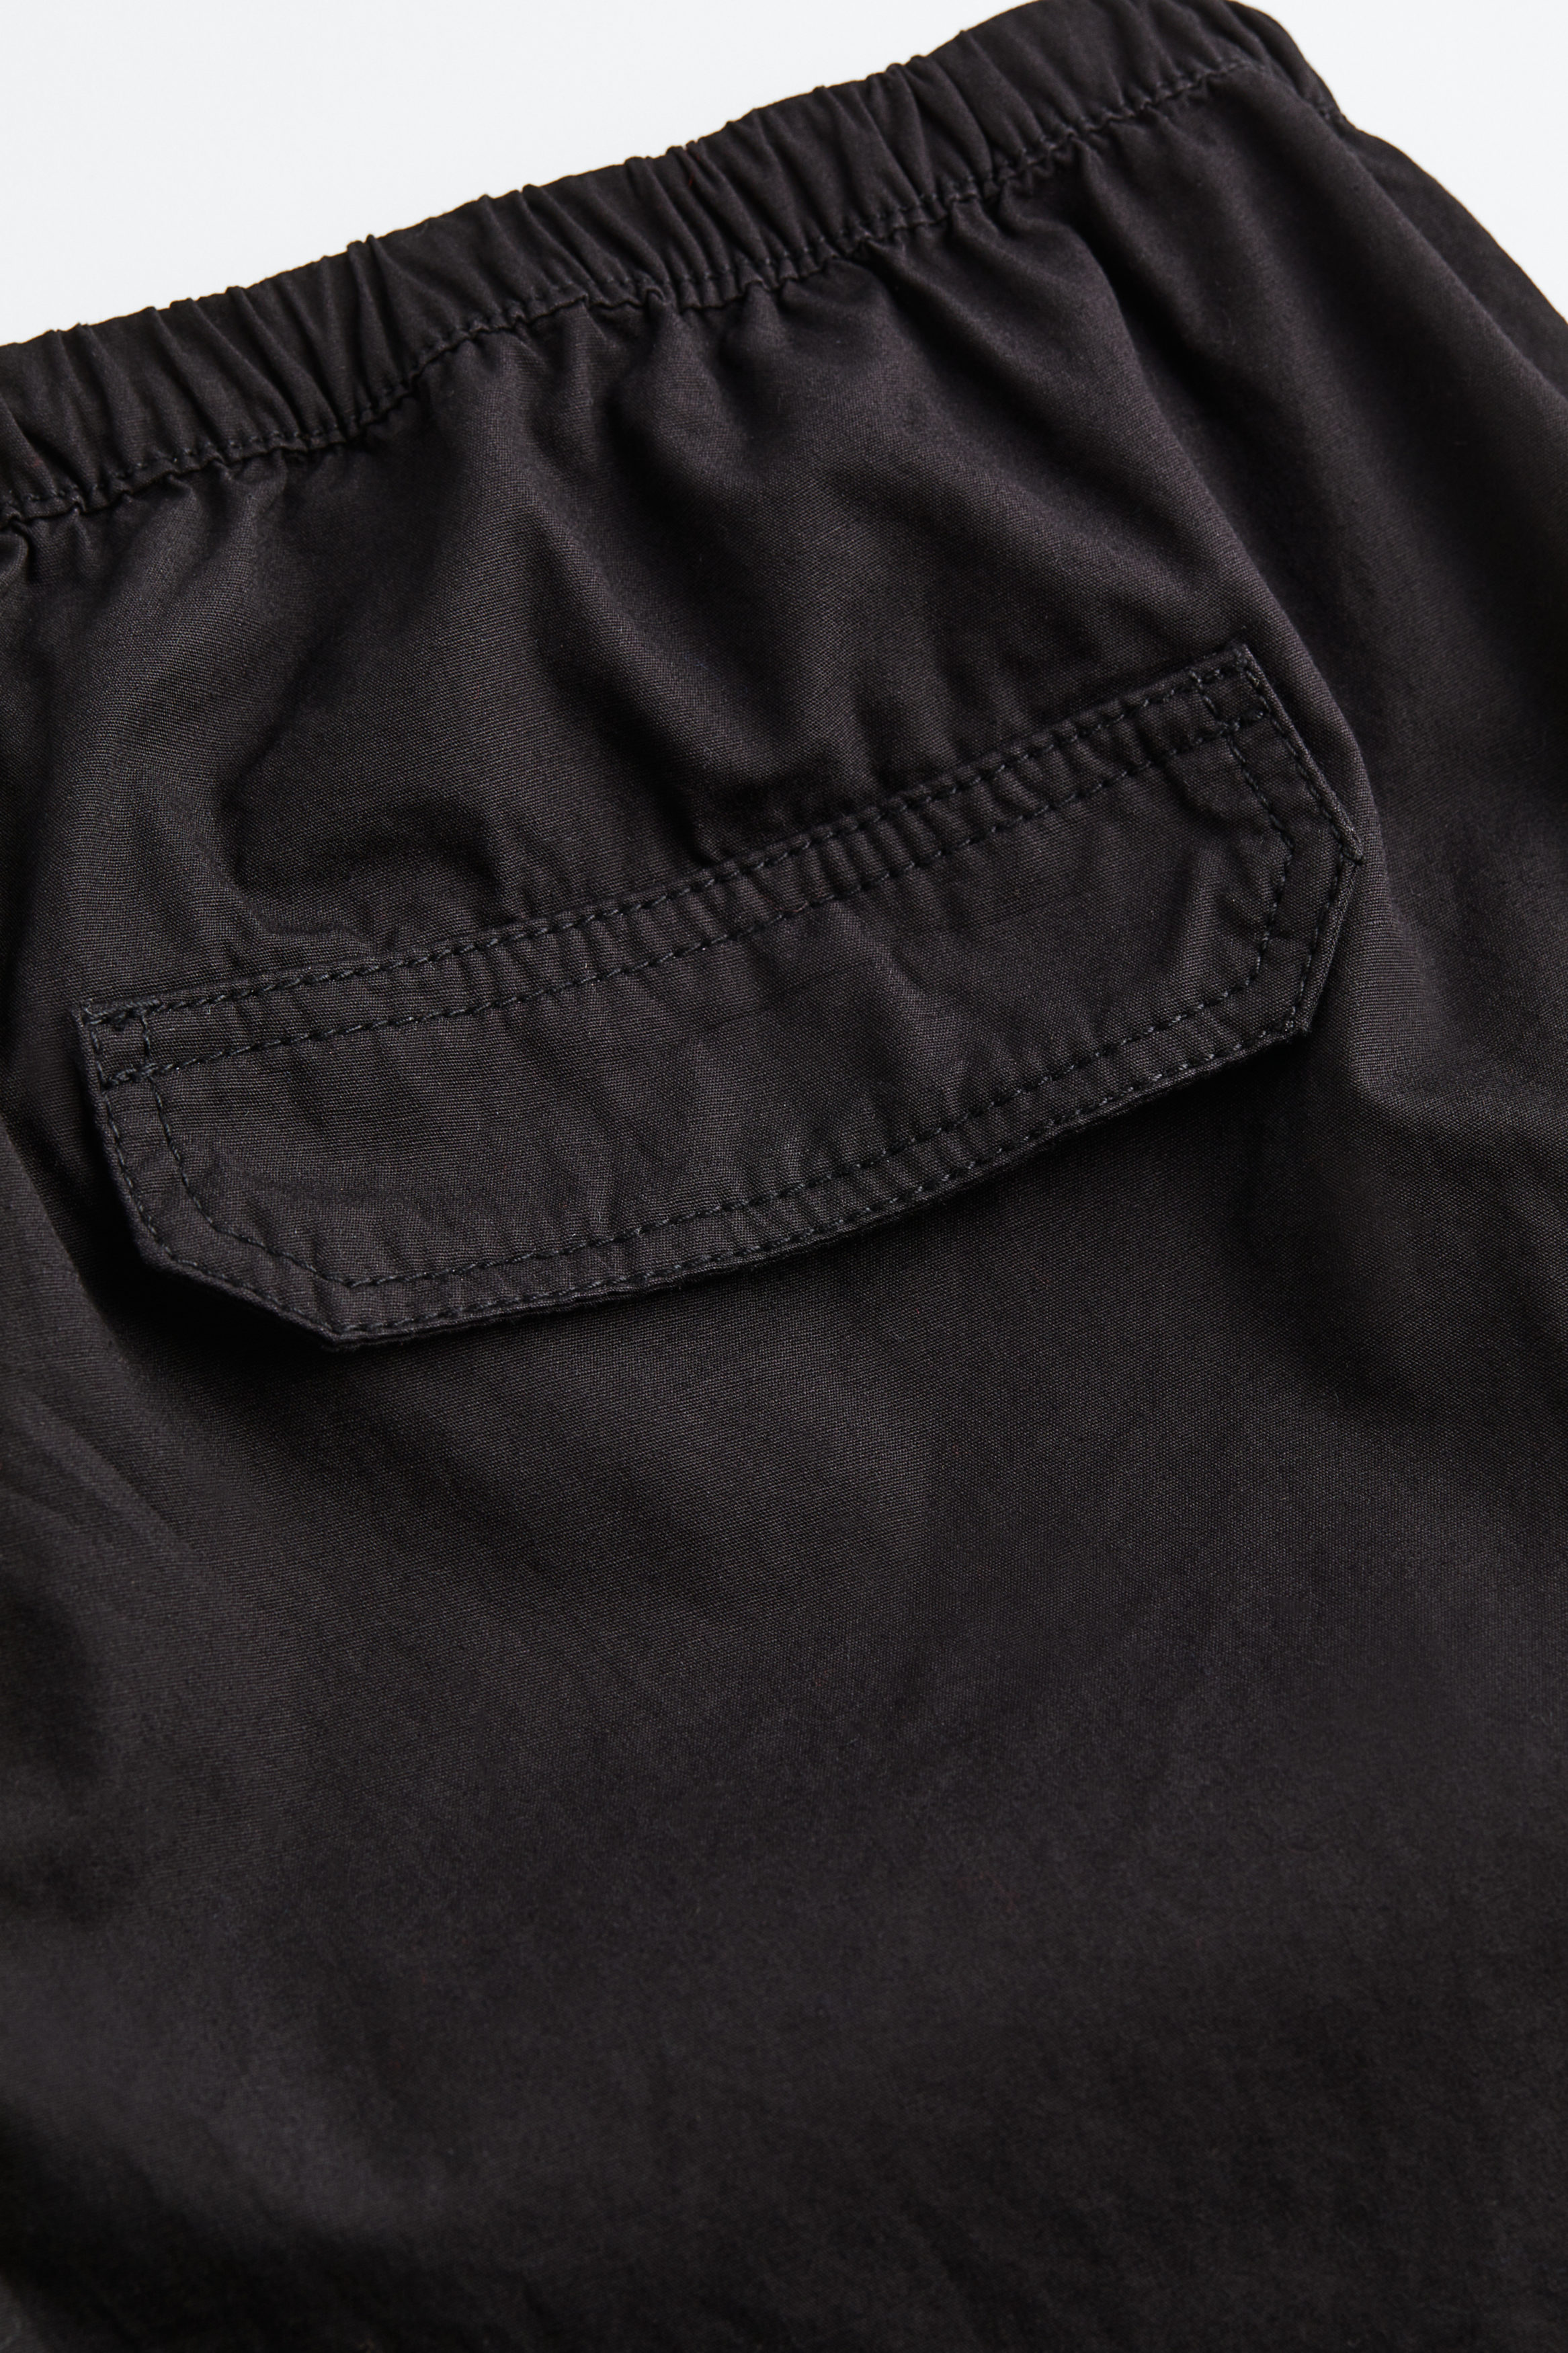 Parachute trousers - Black - Divided | H&M KSA